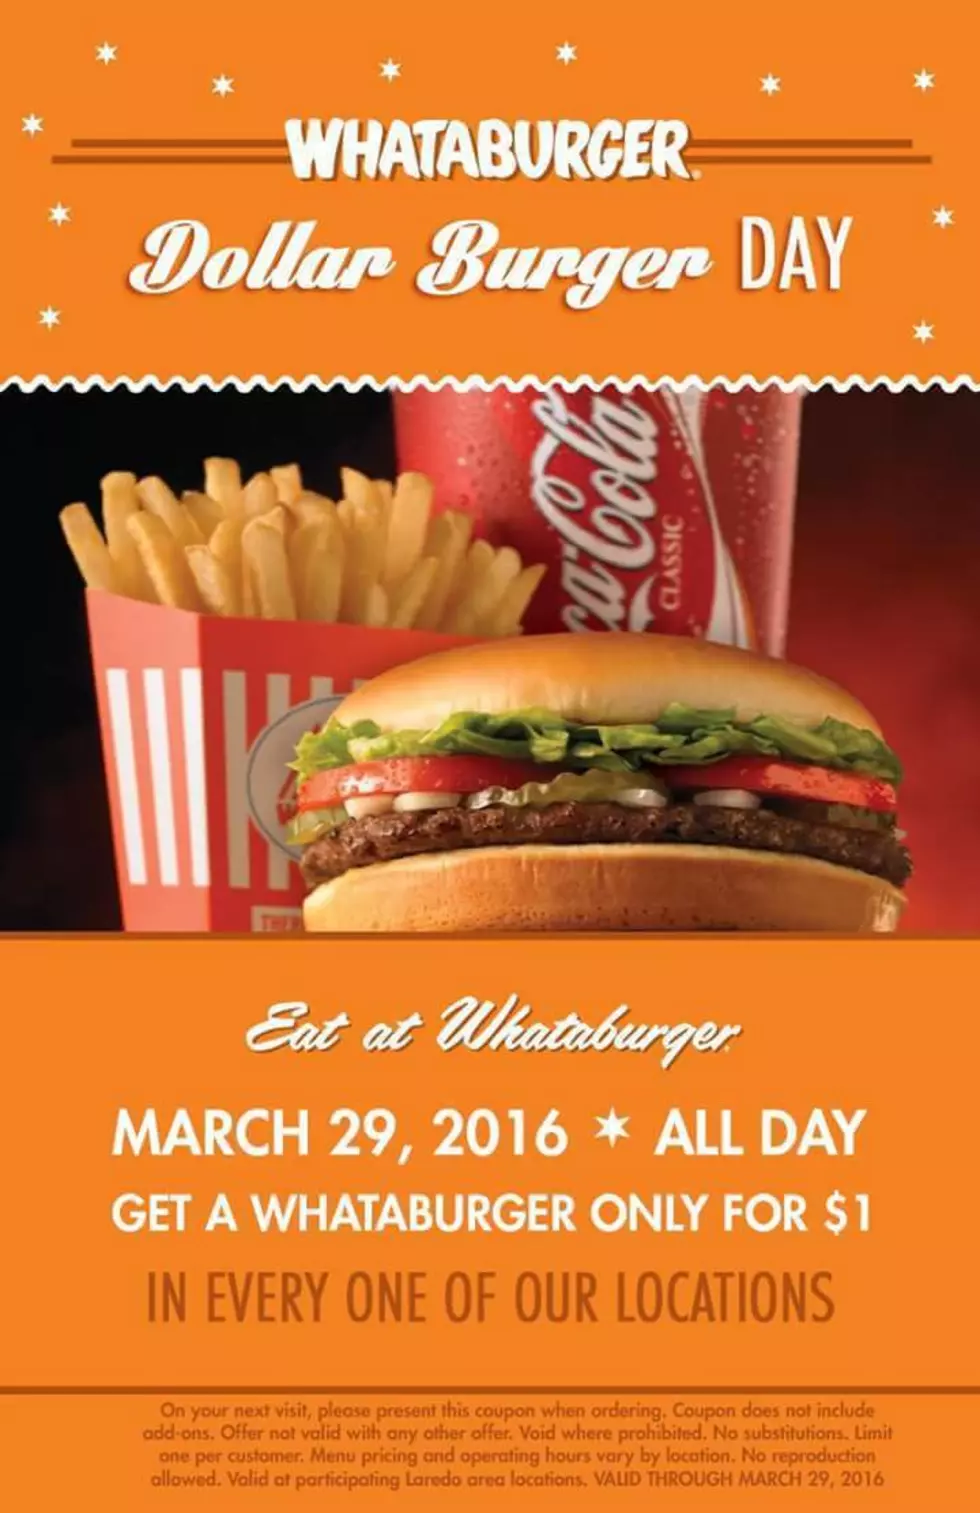 Fake Facebook Post About Whataburger ‘Dollar Burger Day’